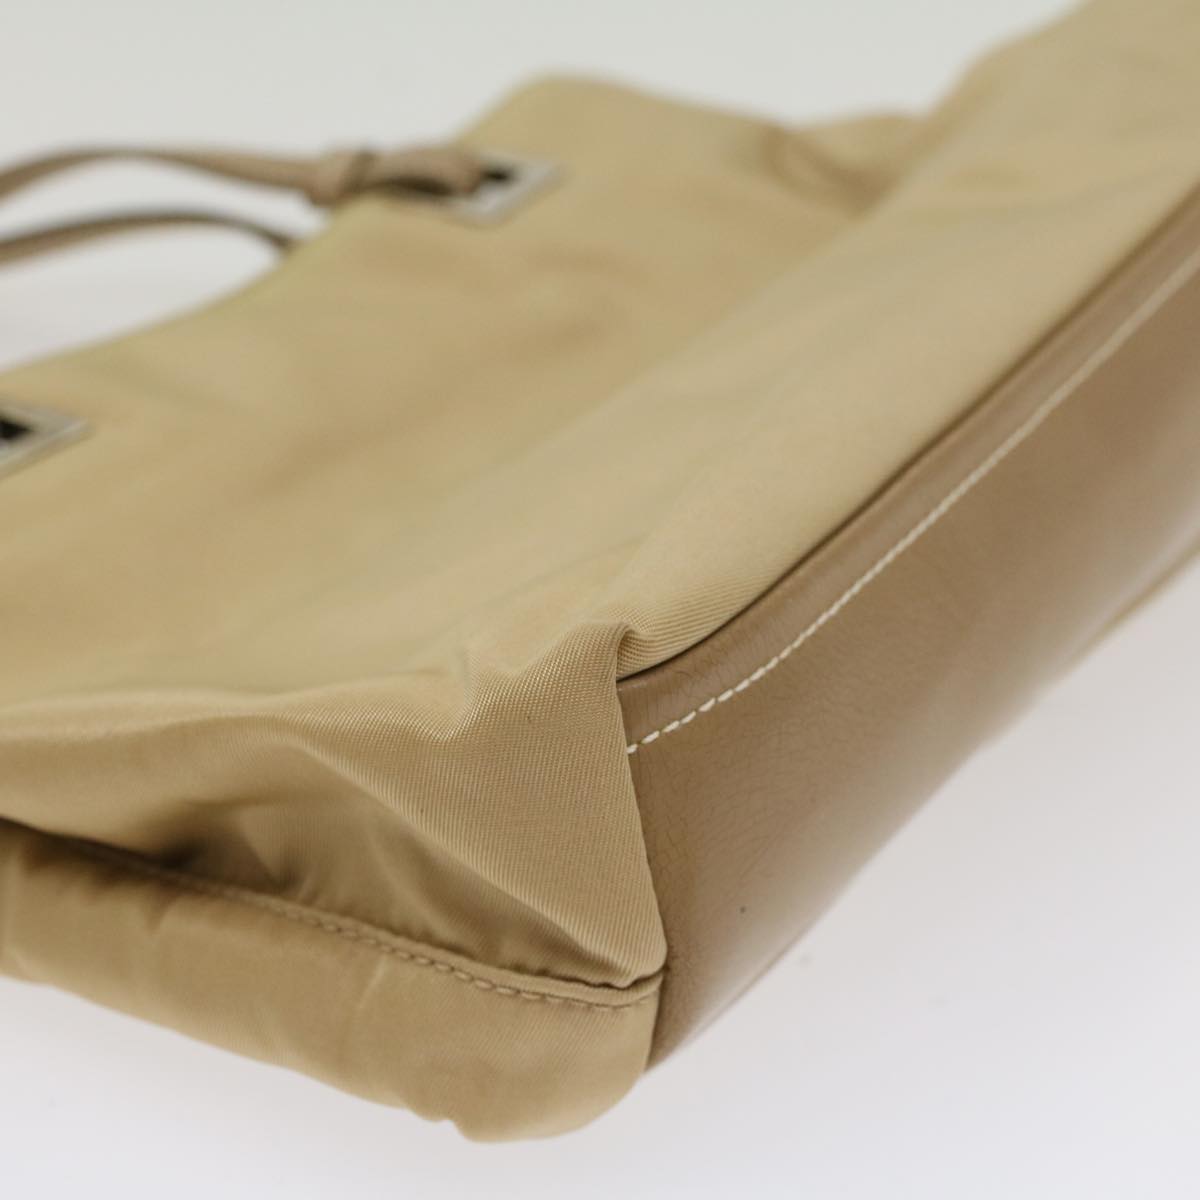 PRADA Hand Bag Nylon Beige Auth 49590